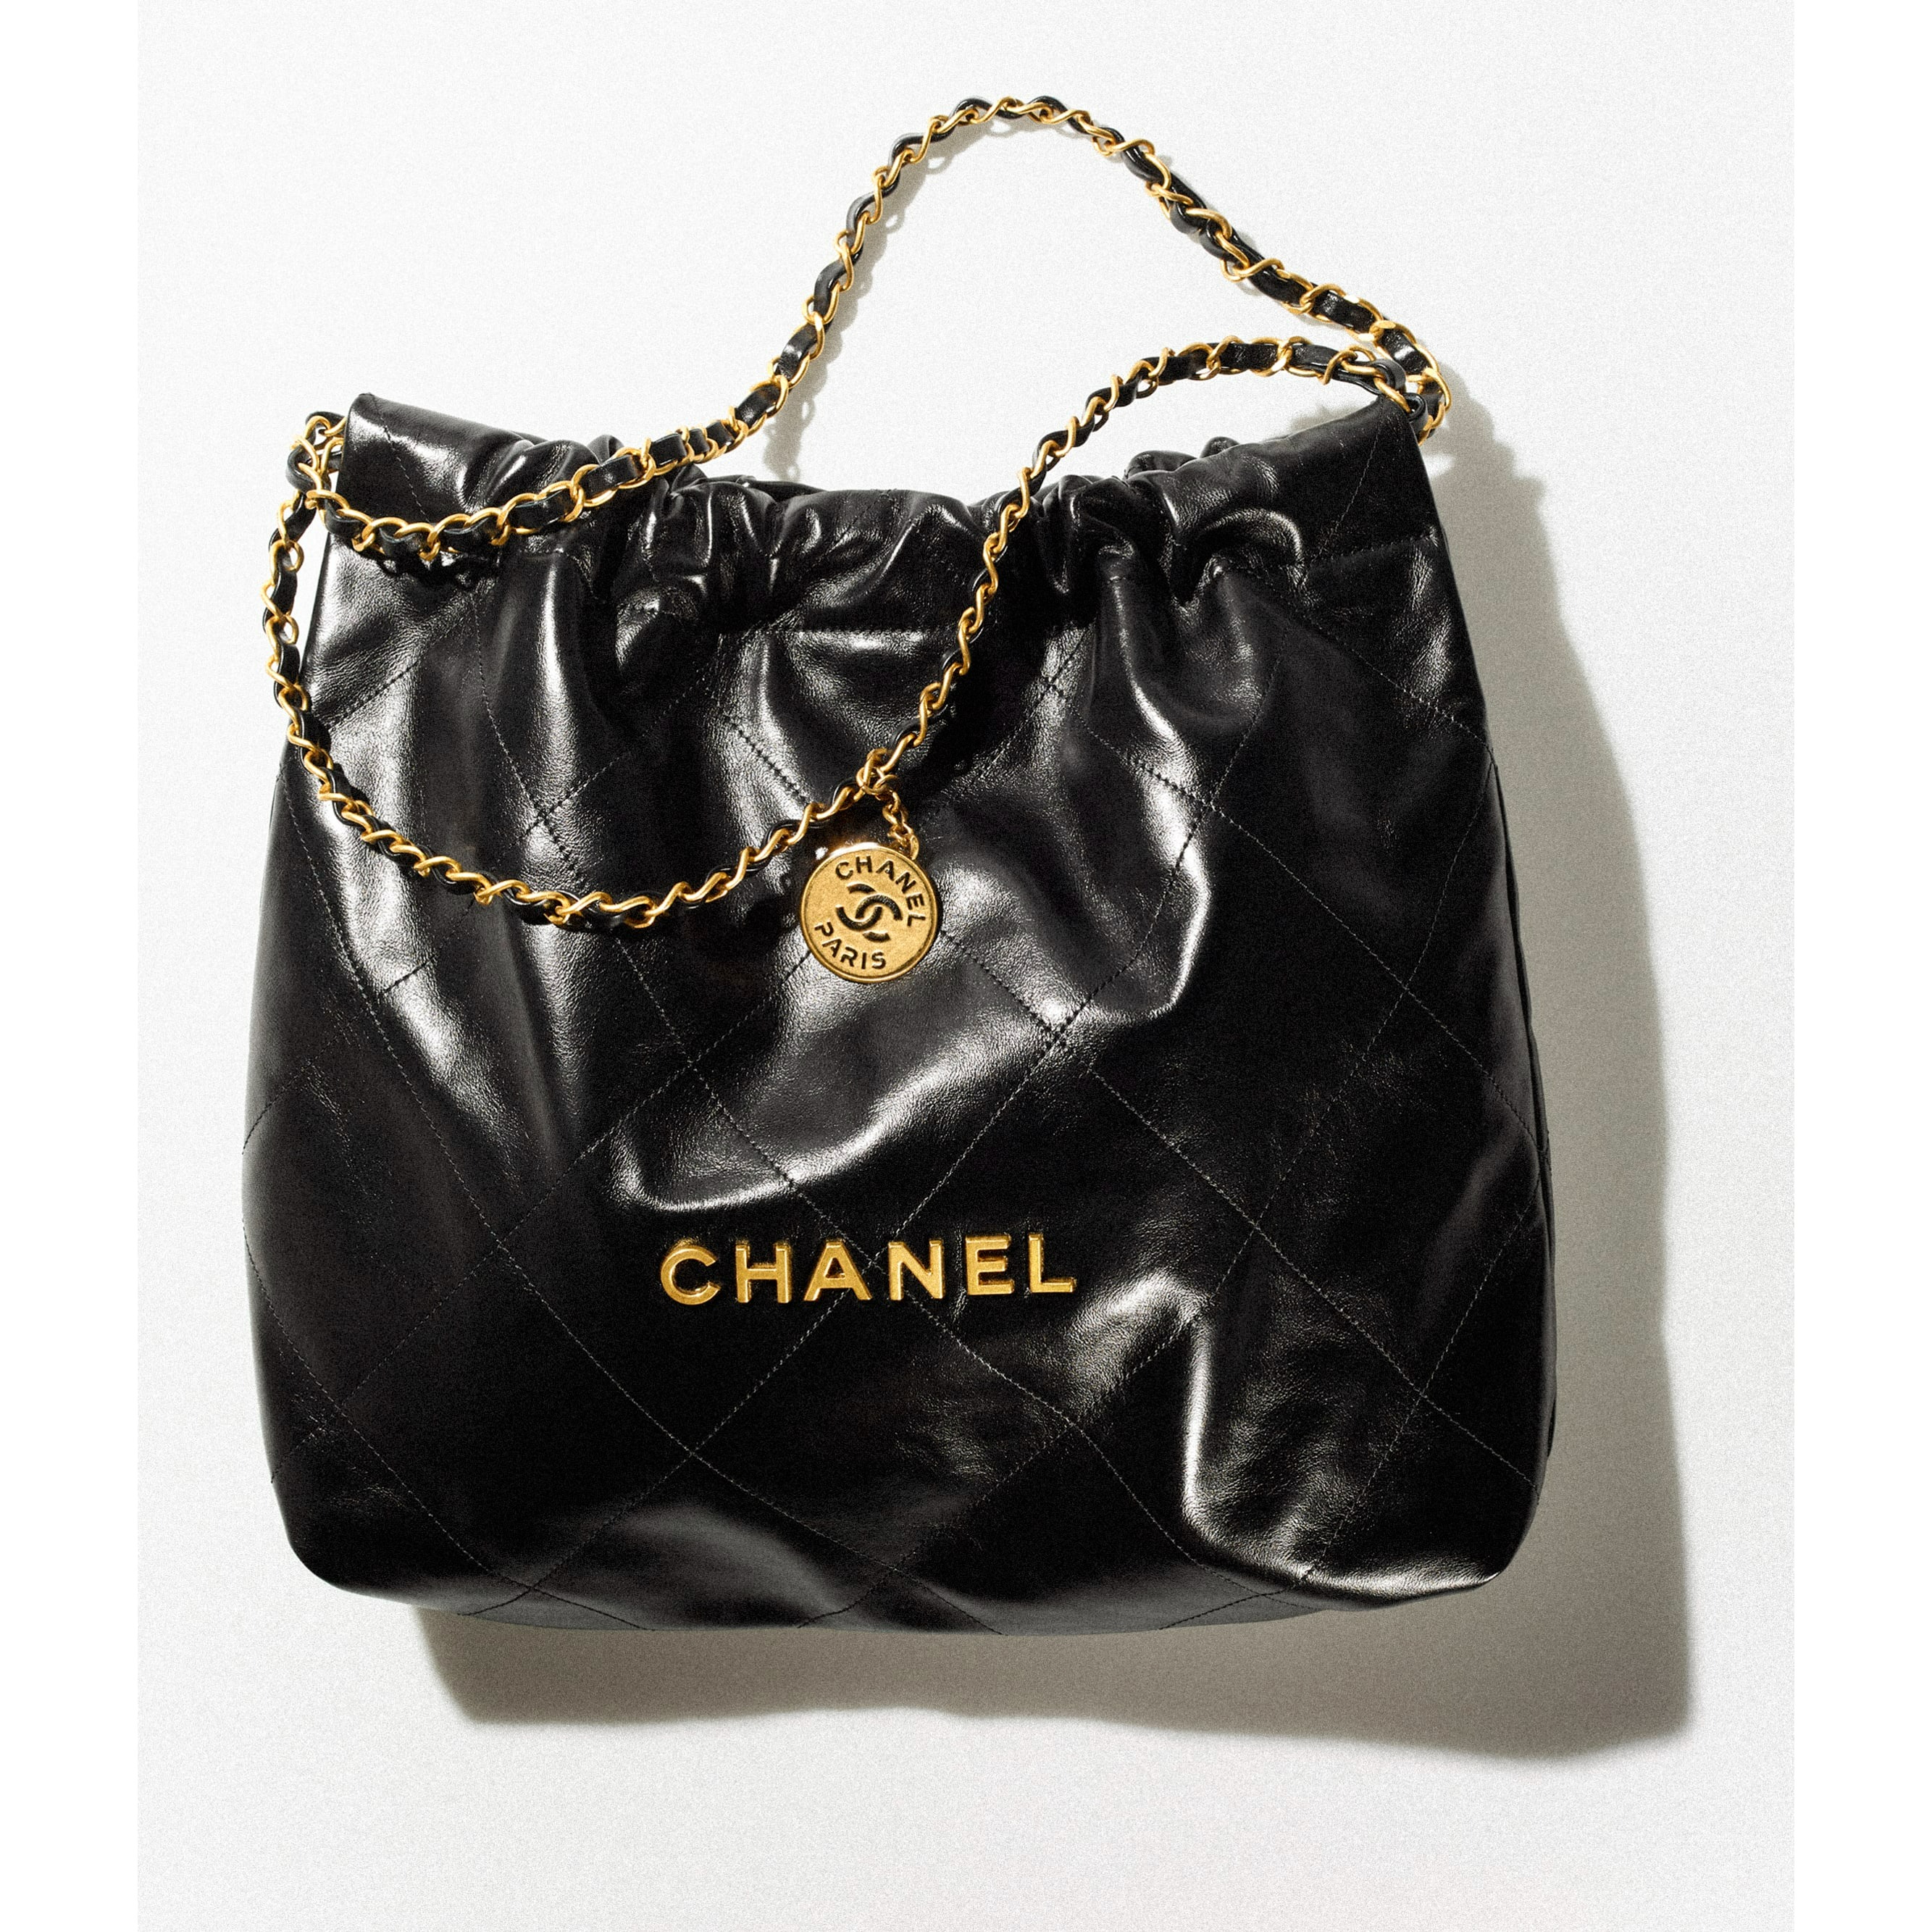 Chanel Çanta Modelleri